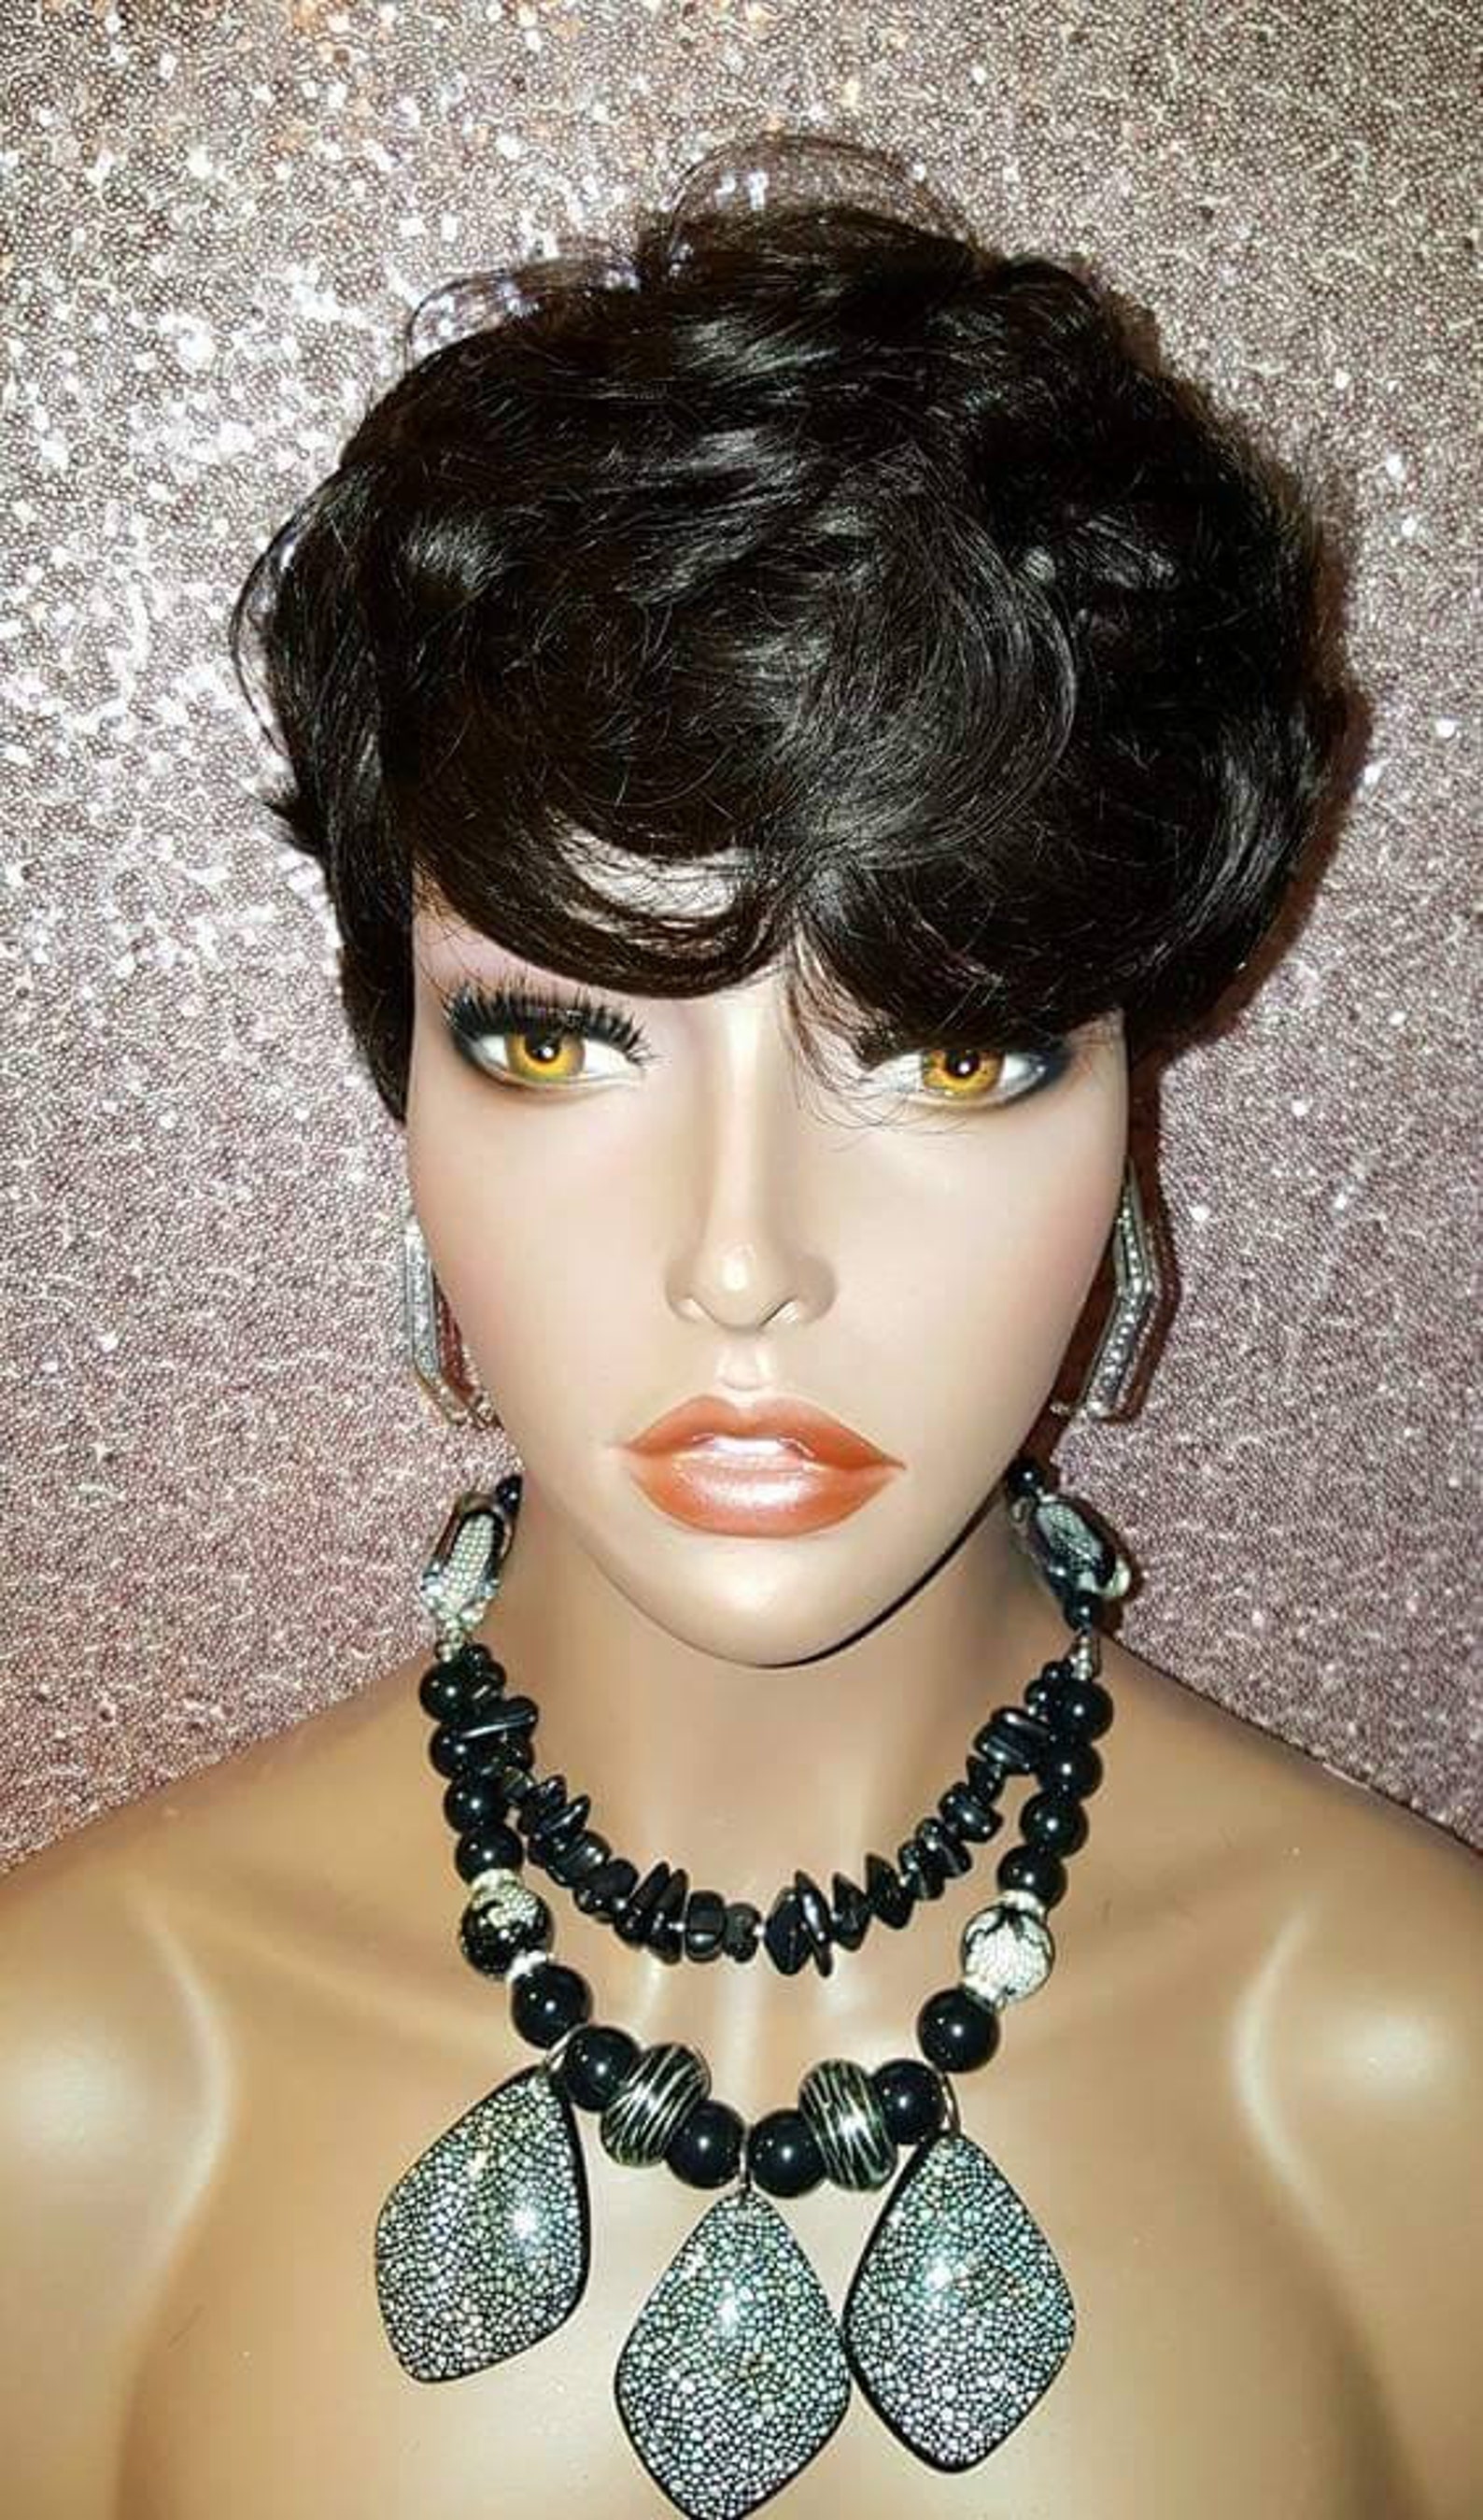 WIG Sassy Pixie Cut Brazilian Remy Human Hair Fashion Vogue | Etsy